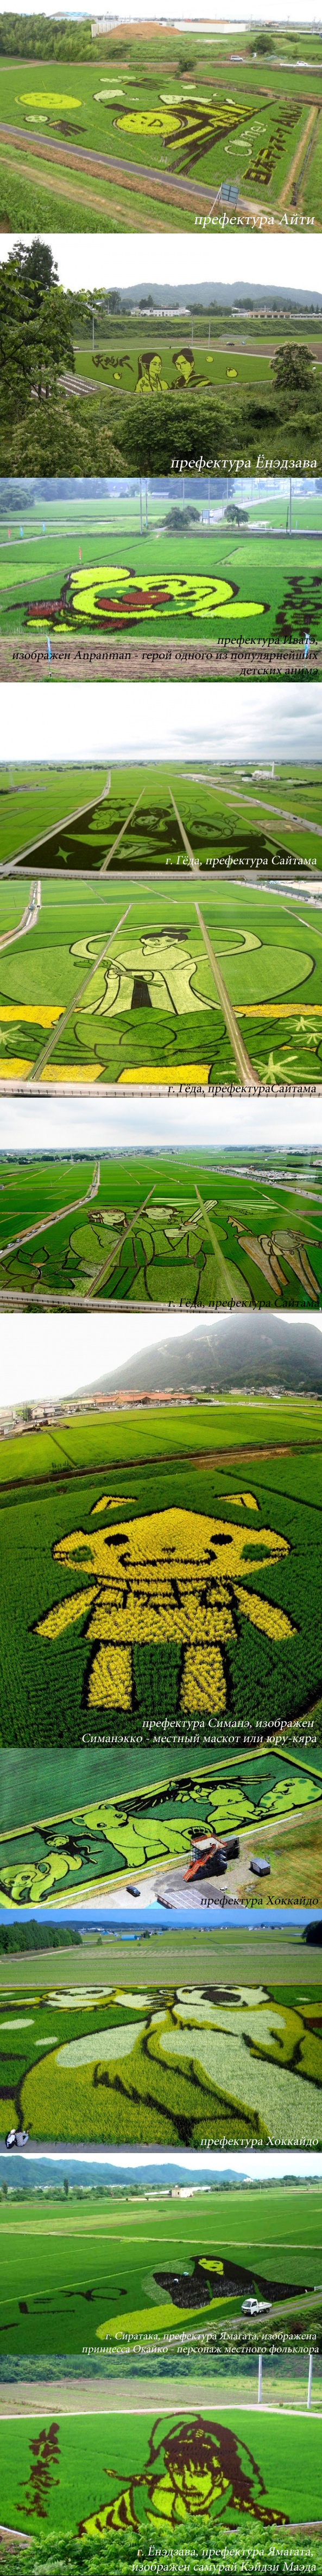 art-rice-paddies-Japan-prefectures-02